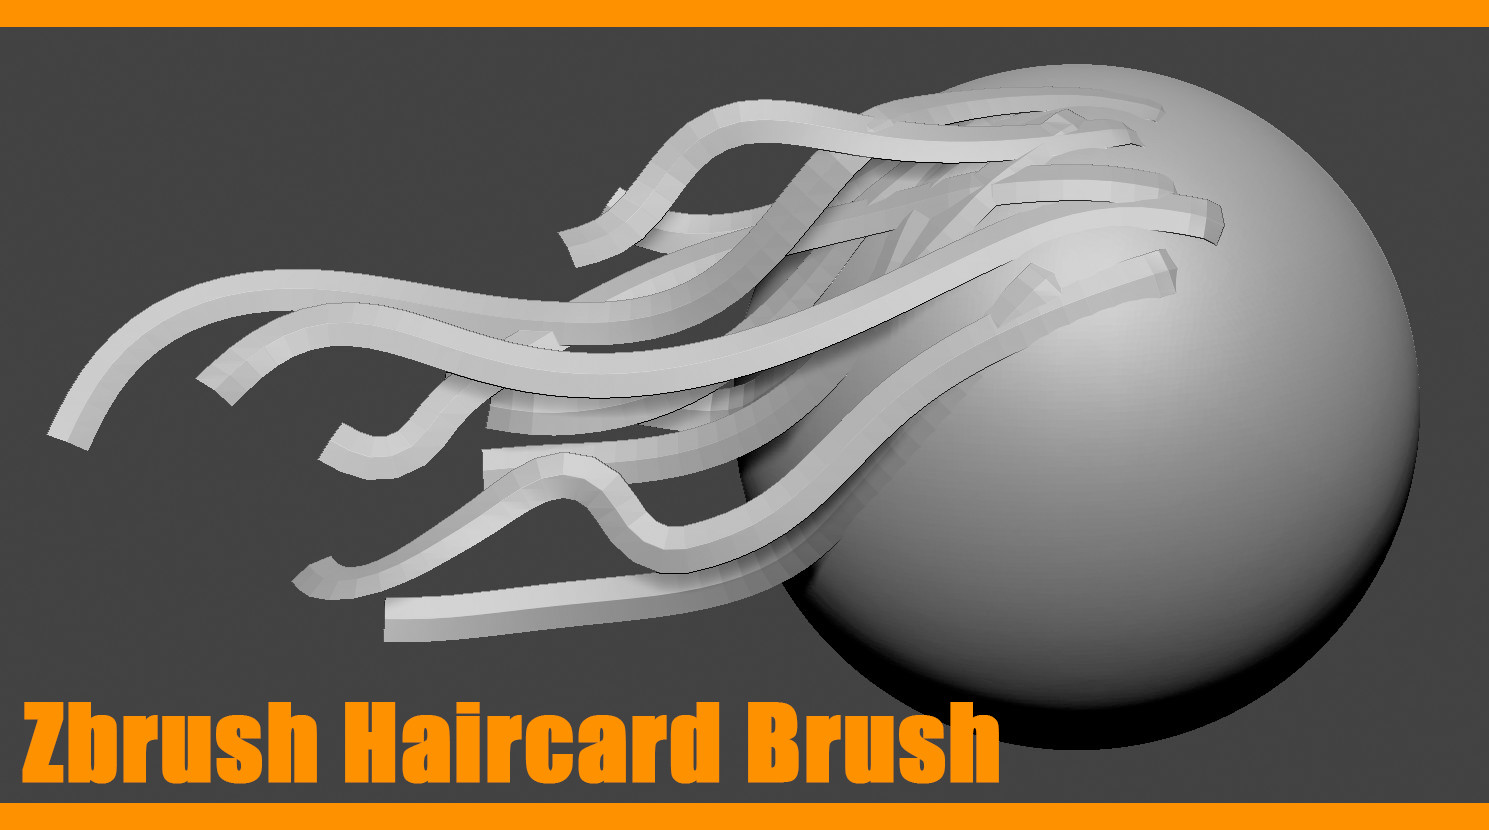 FiberShop  Realtime Haircard Texture Generator Tool